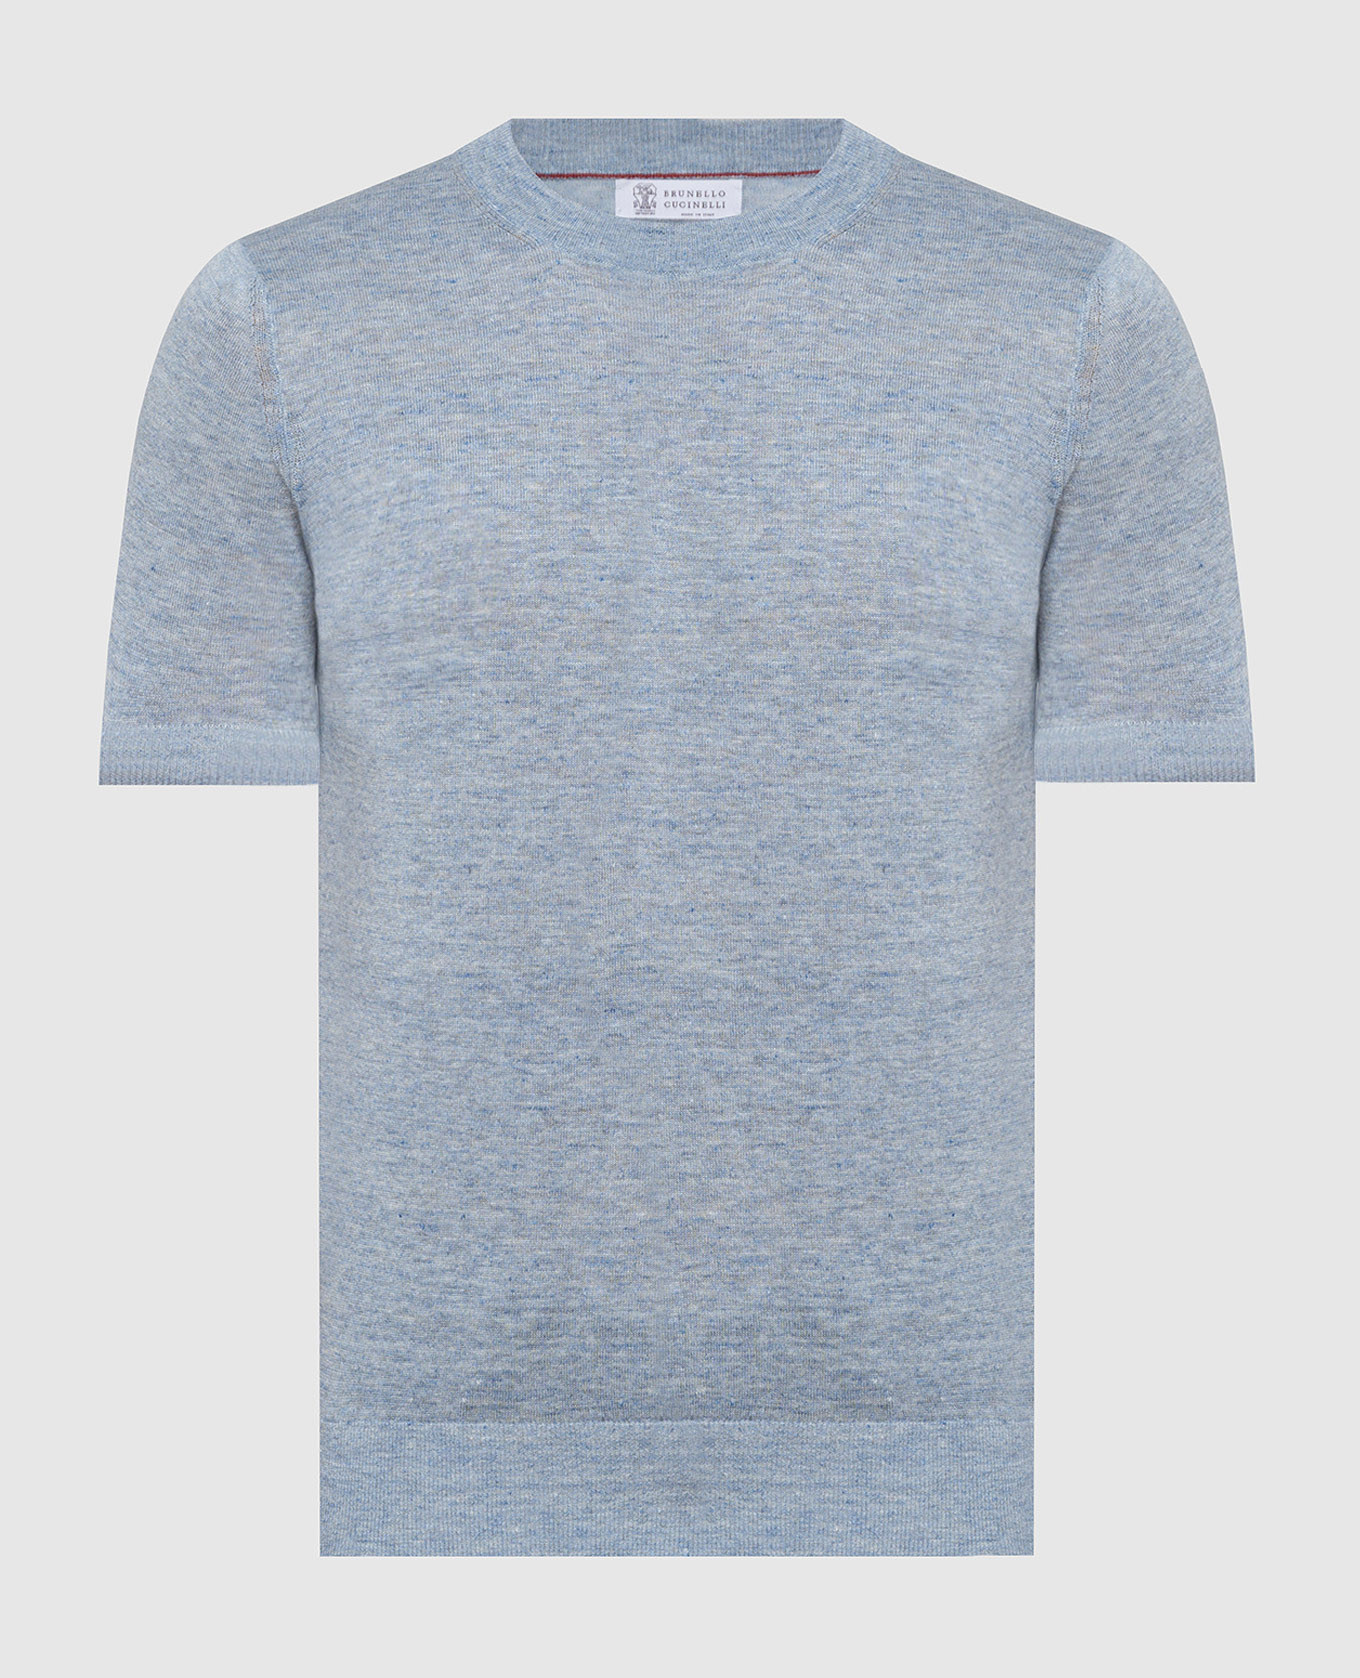 Blue melange t-shirt with linen